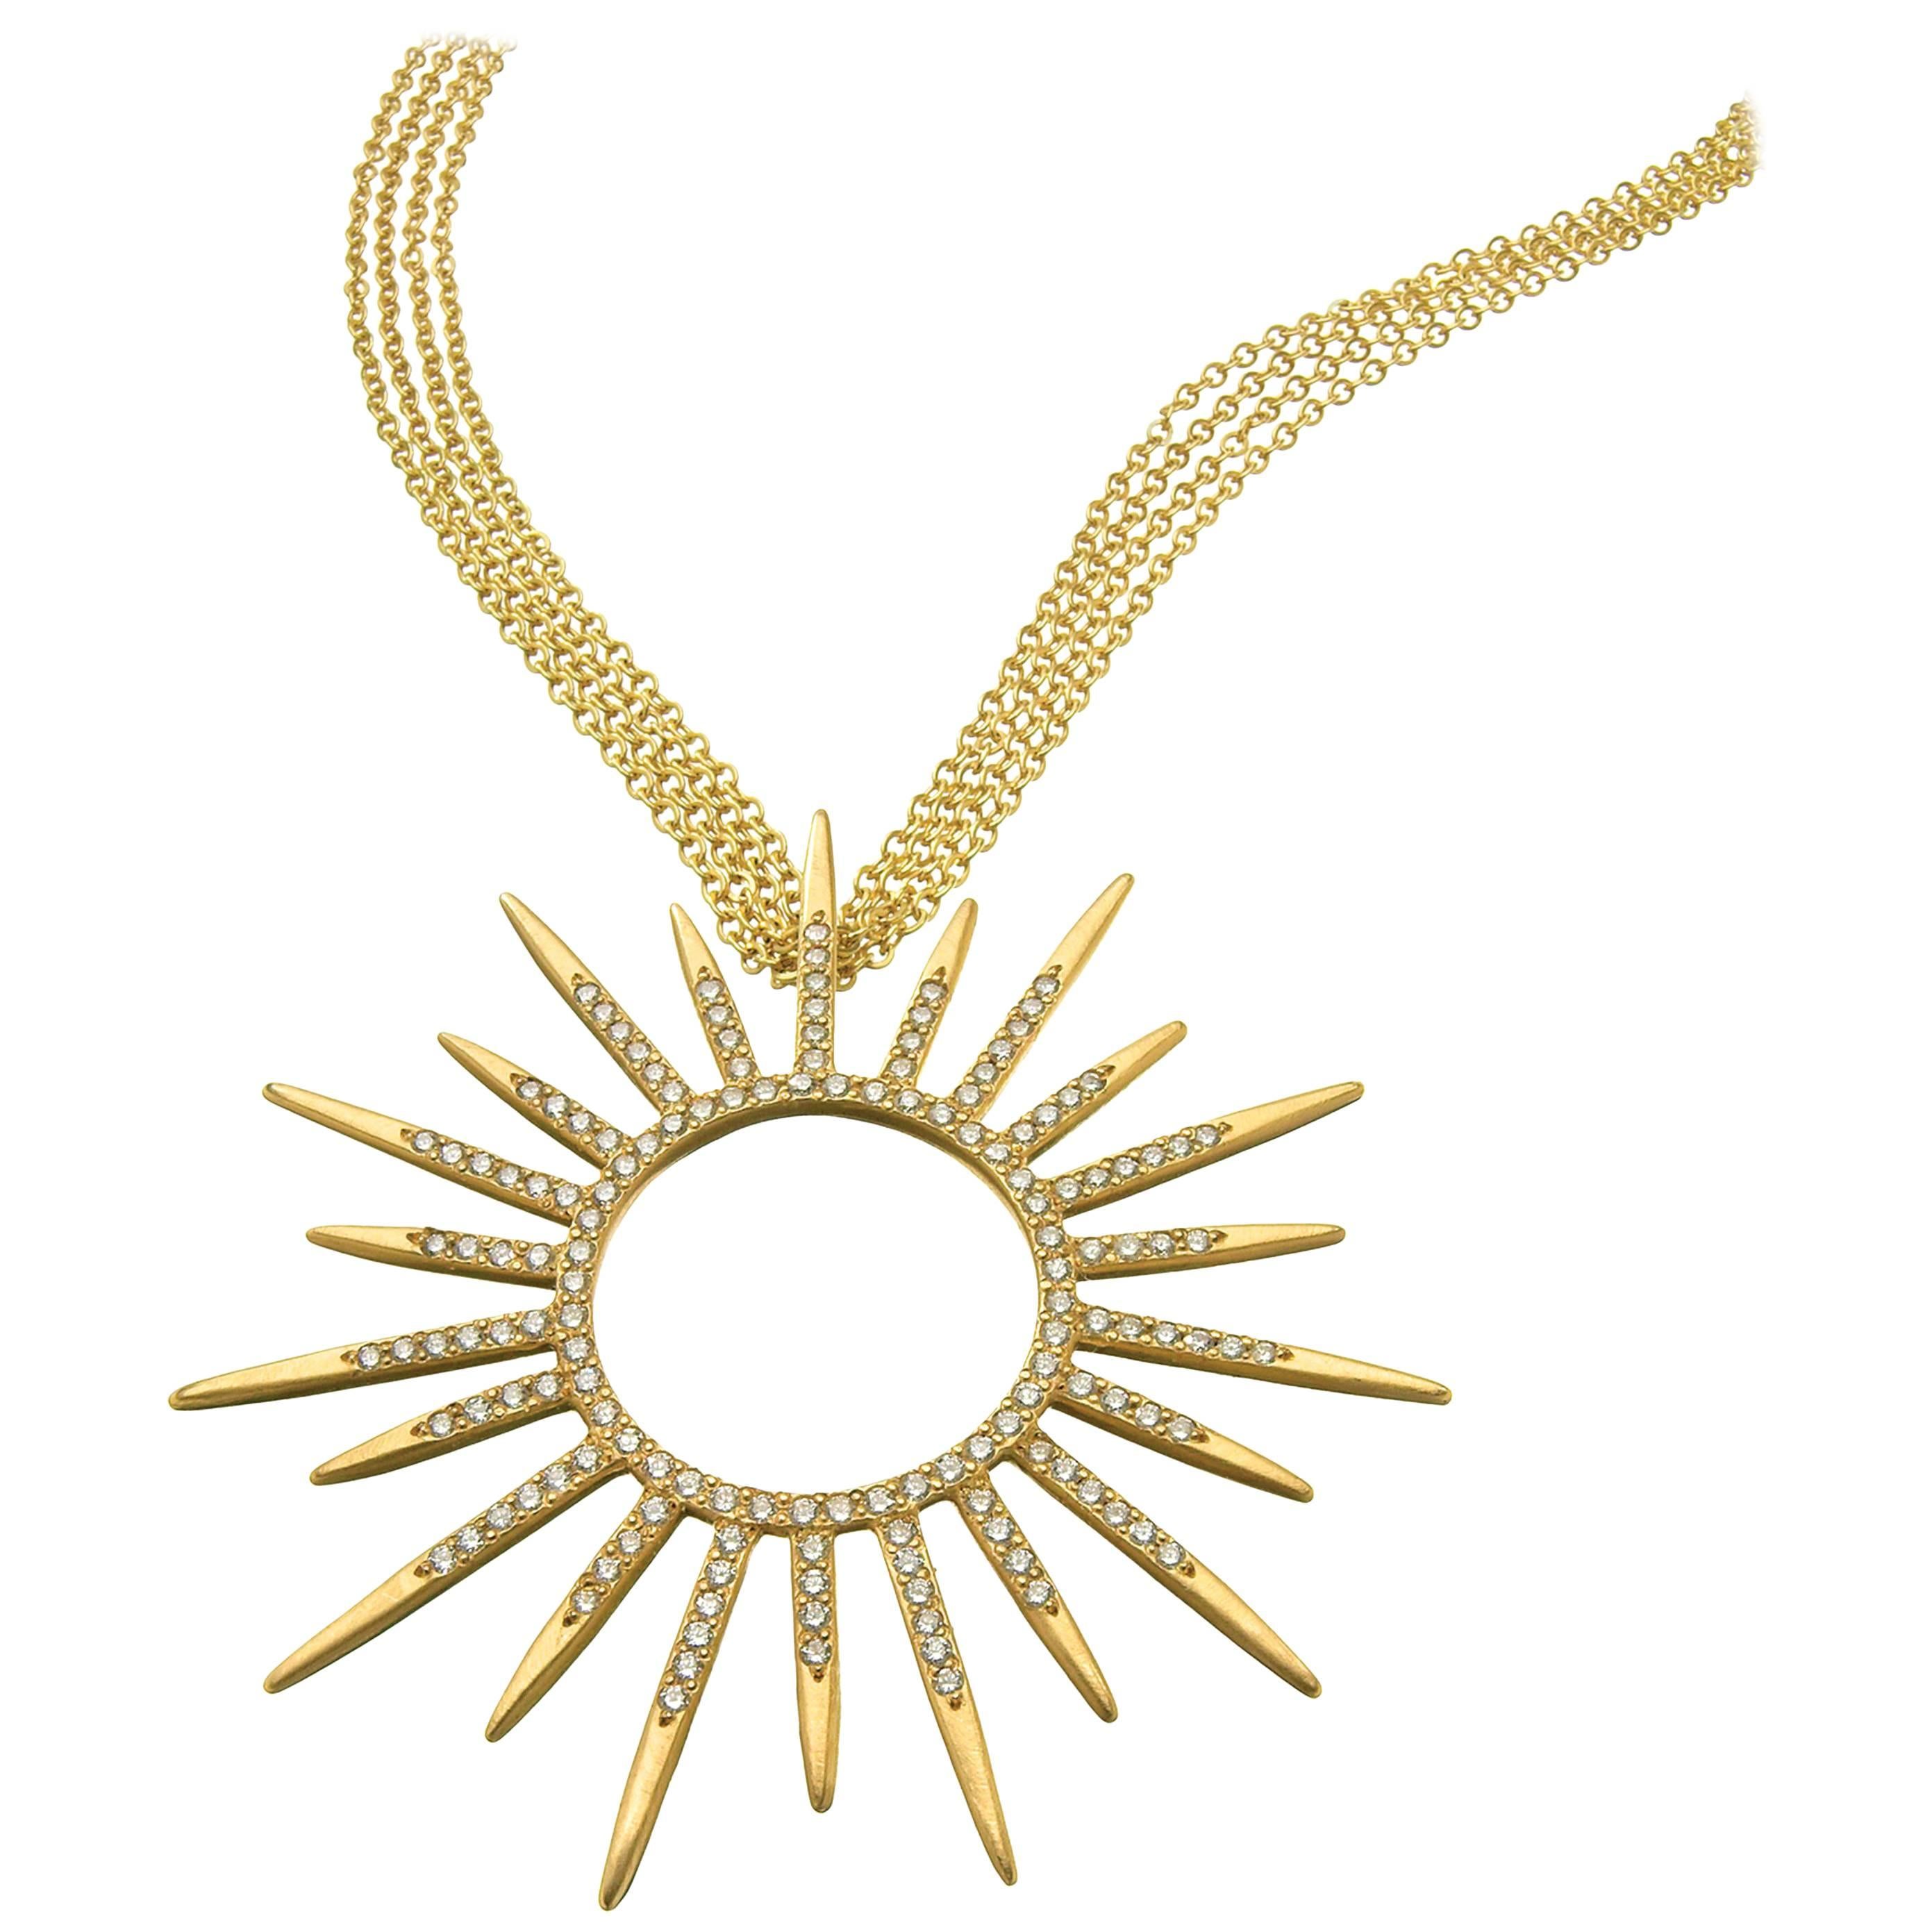 Wendy Brandes 2 Carat Diamond and 18K Yellow Gold Starburst Pendant Necklace